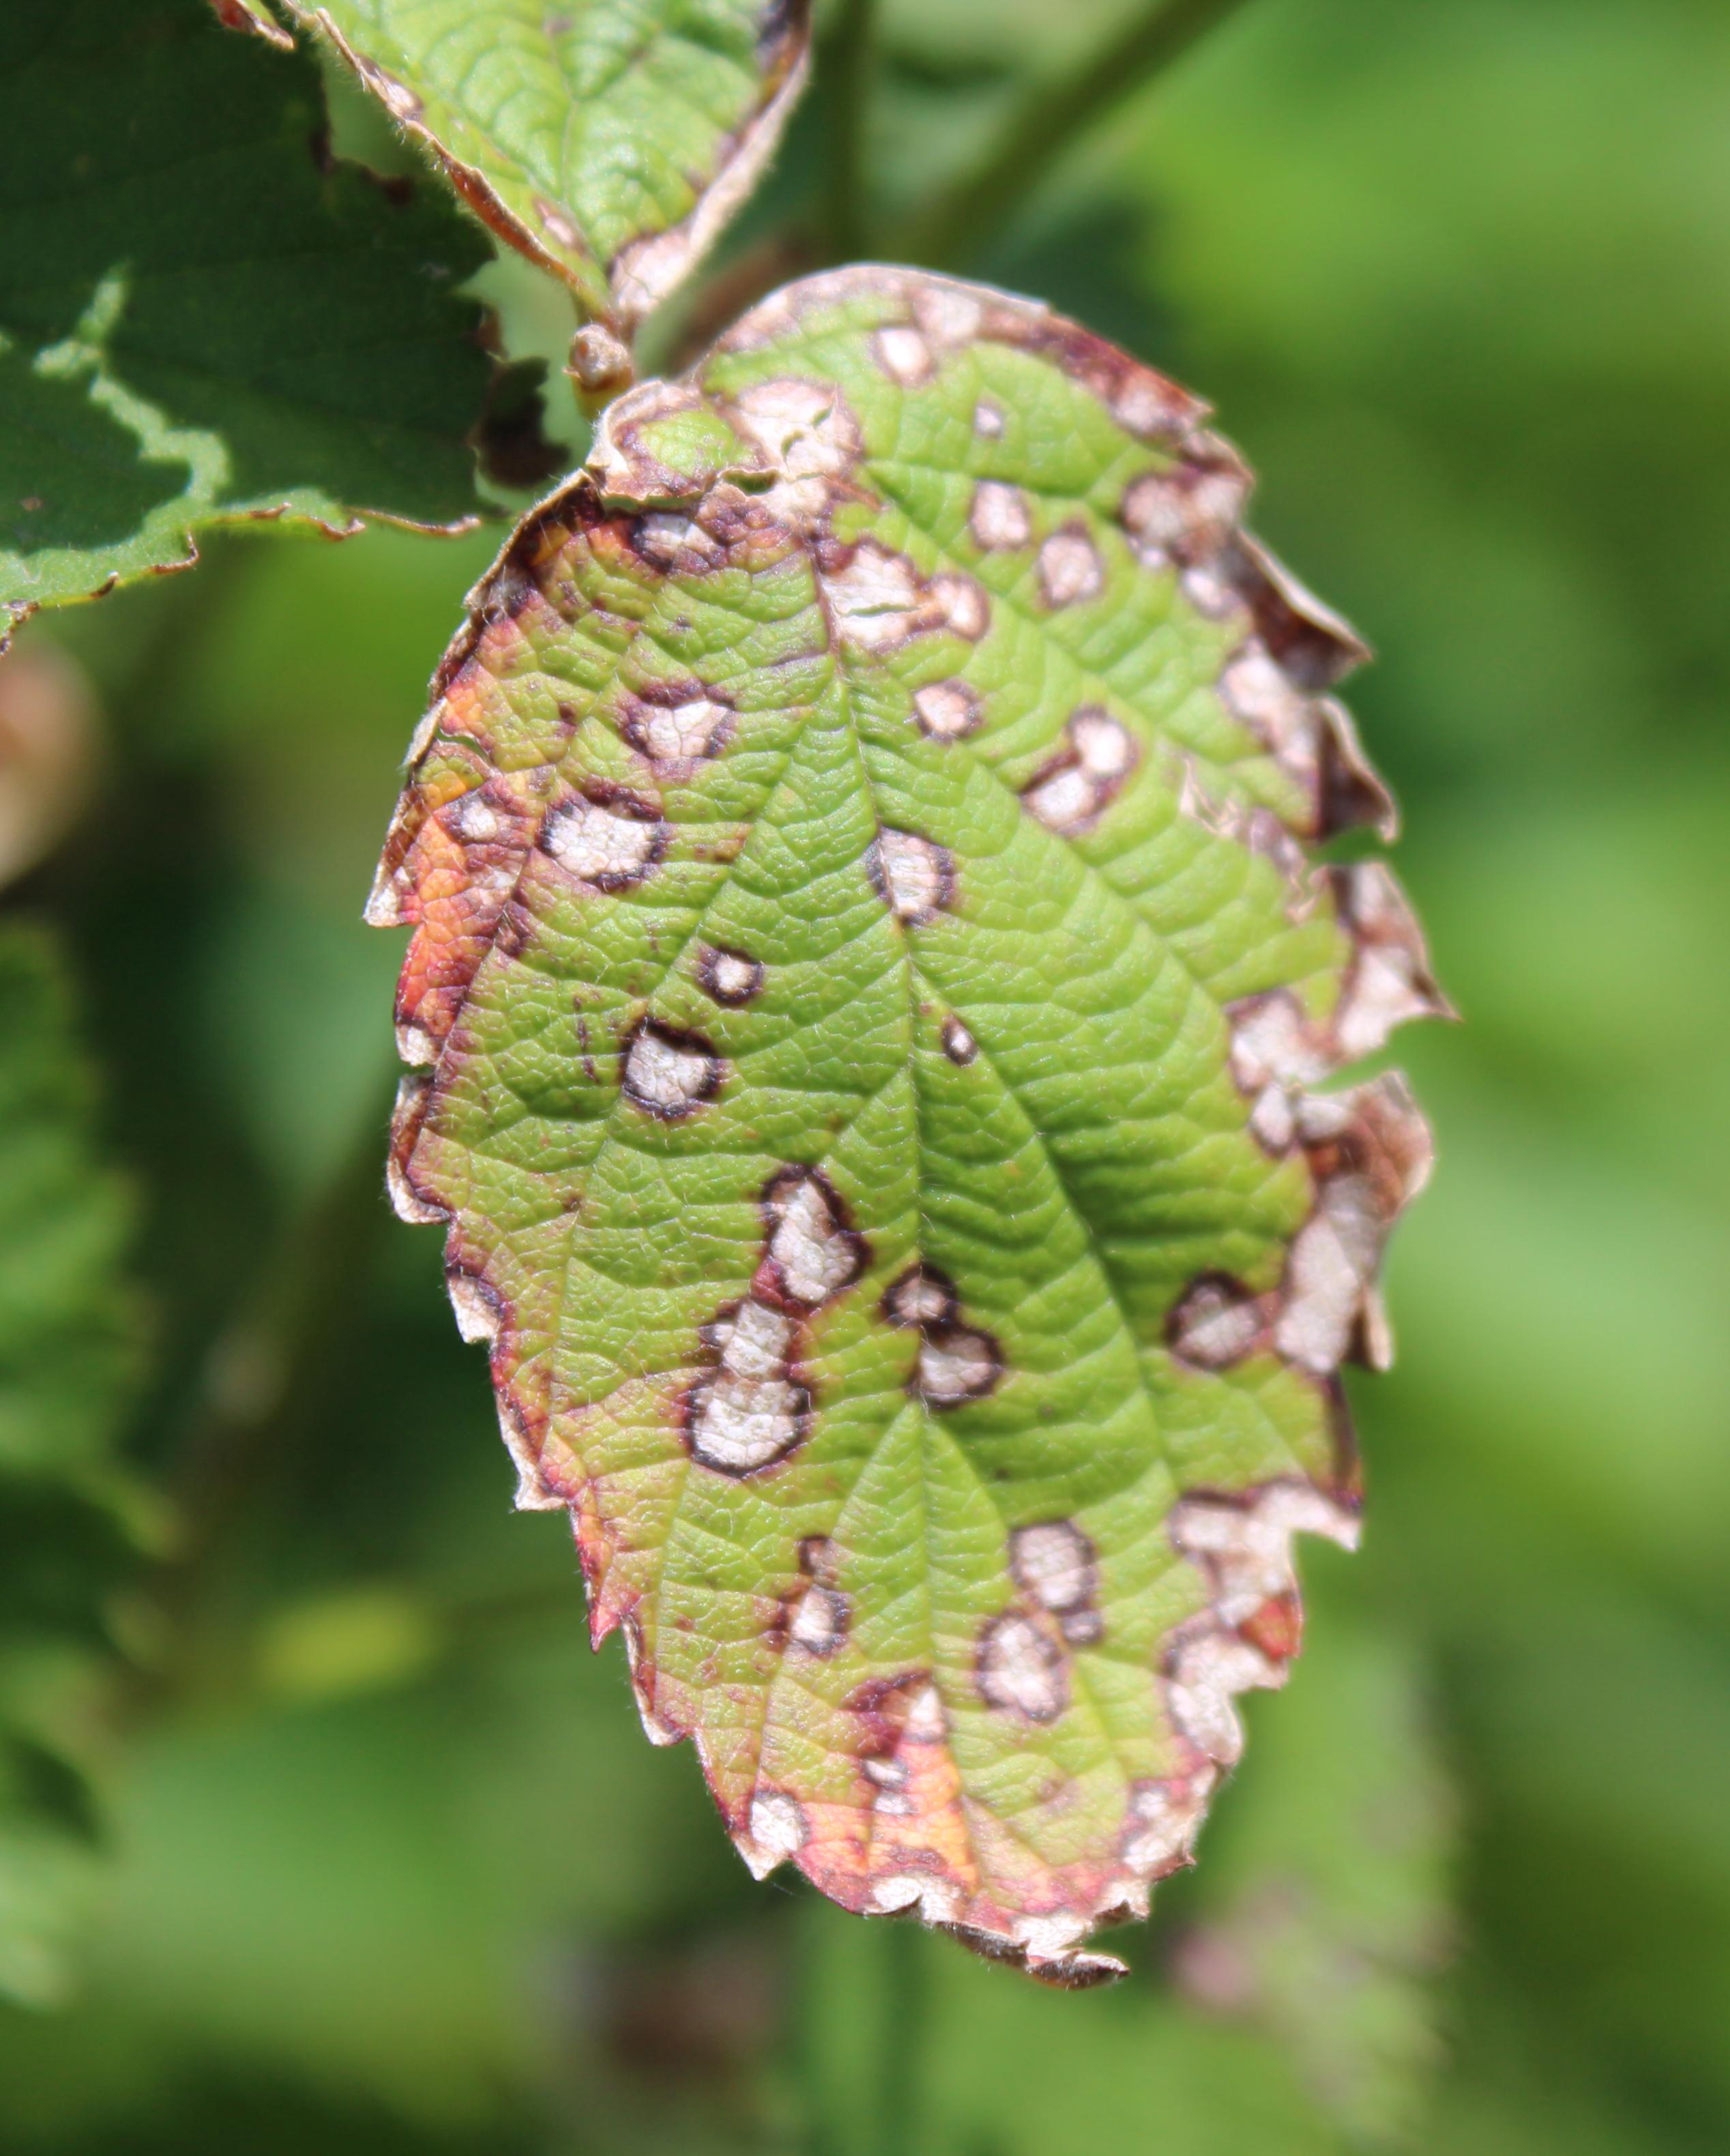 Septoria leaf spot advanced symptoms. 